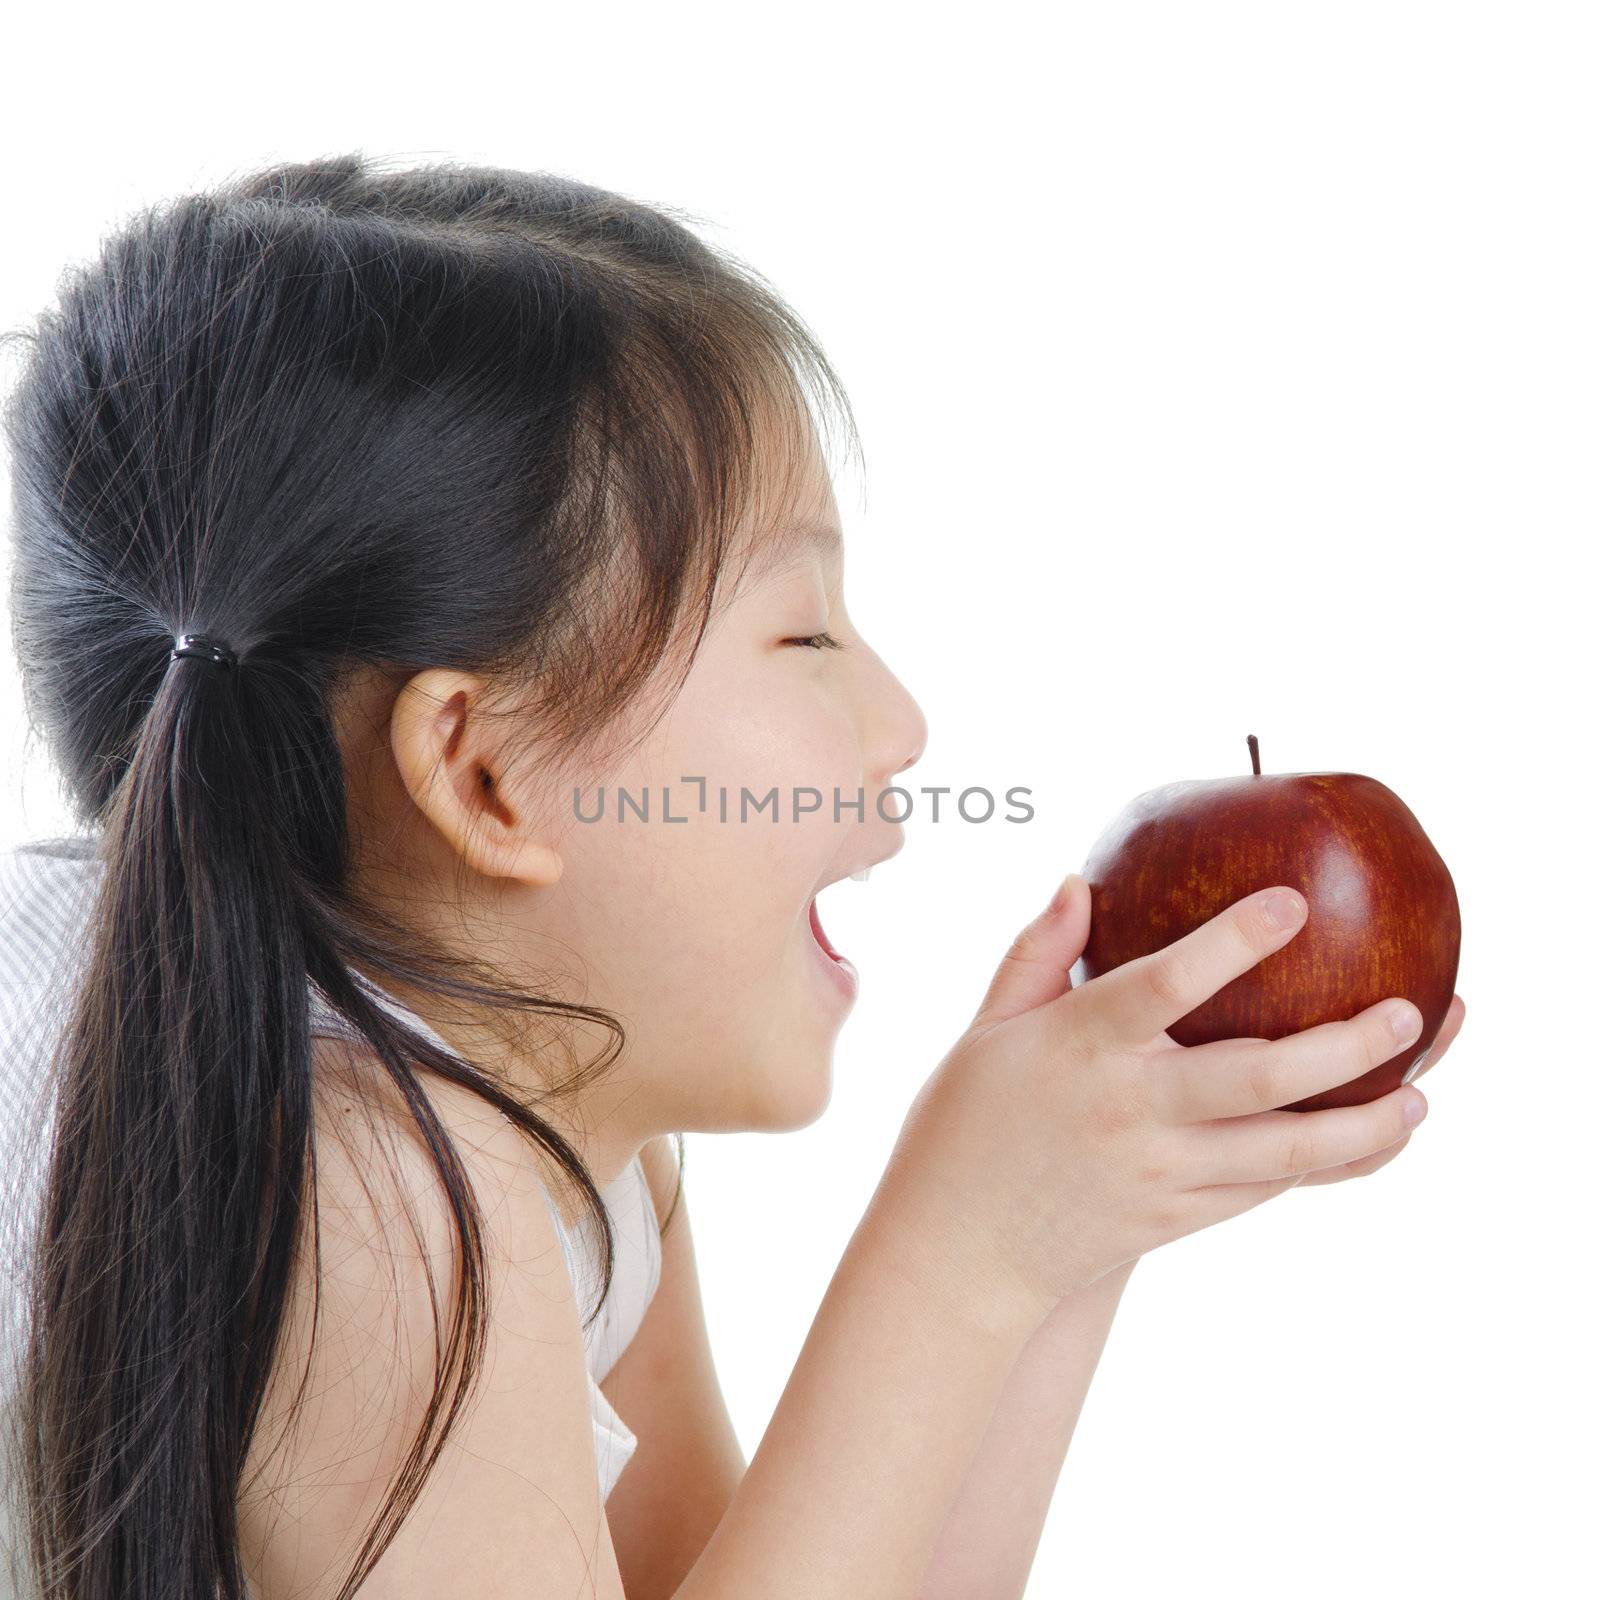 Asian girl holding an apple on white background